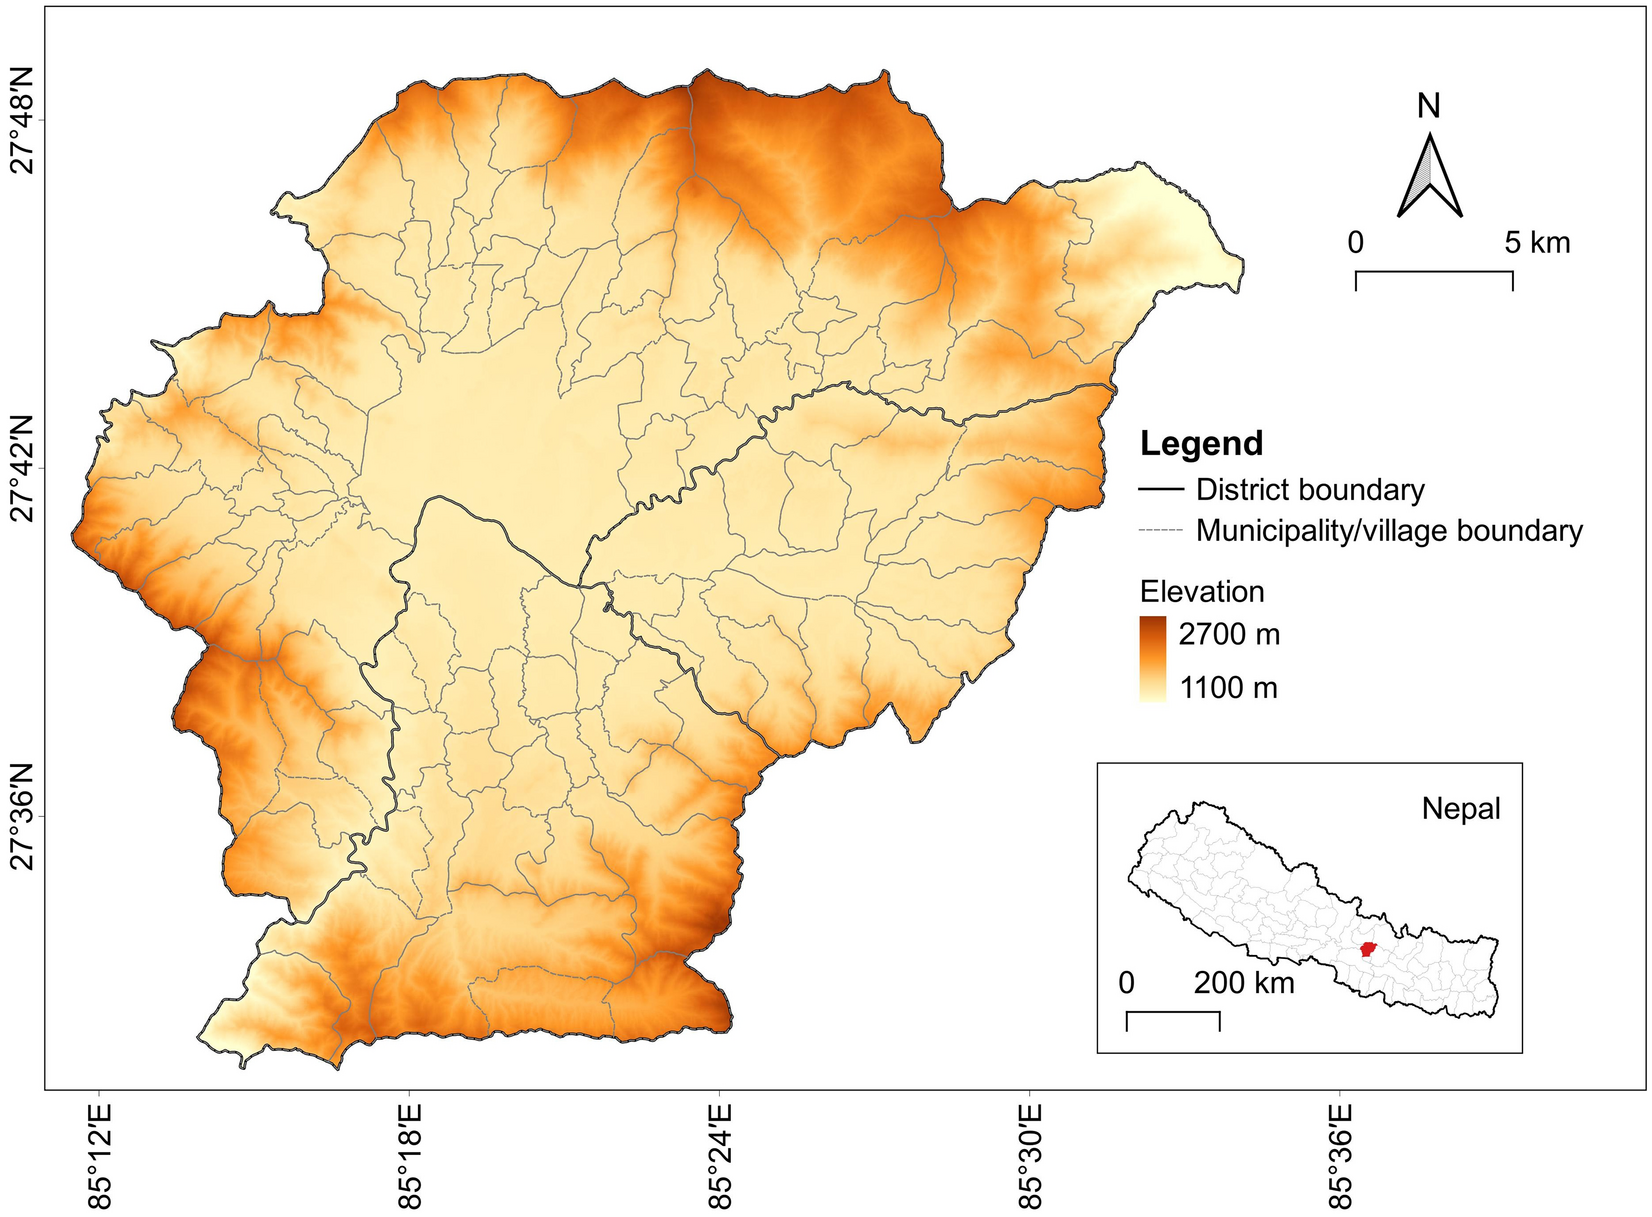 Urban growth modelling and social vulnerability assessment for a hazardous  Kathmandu Valley